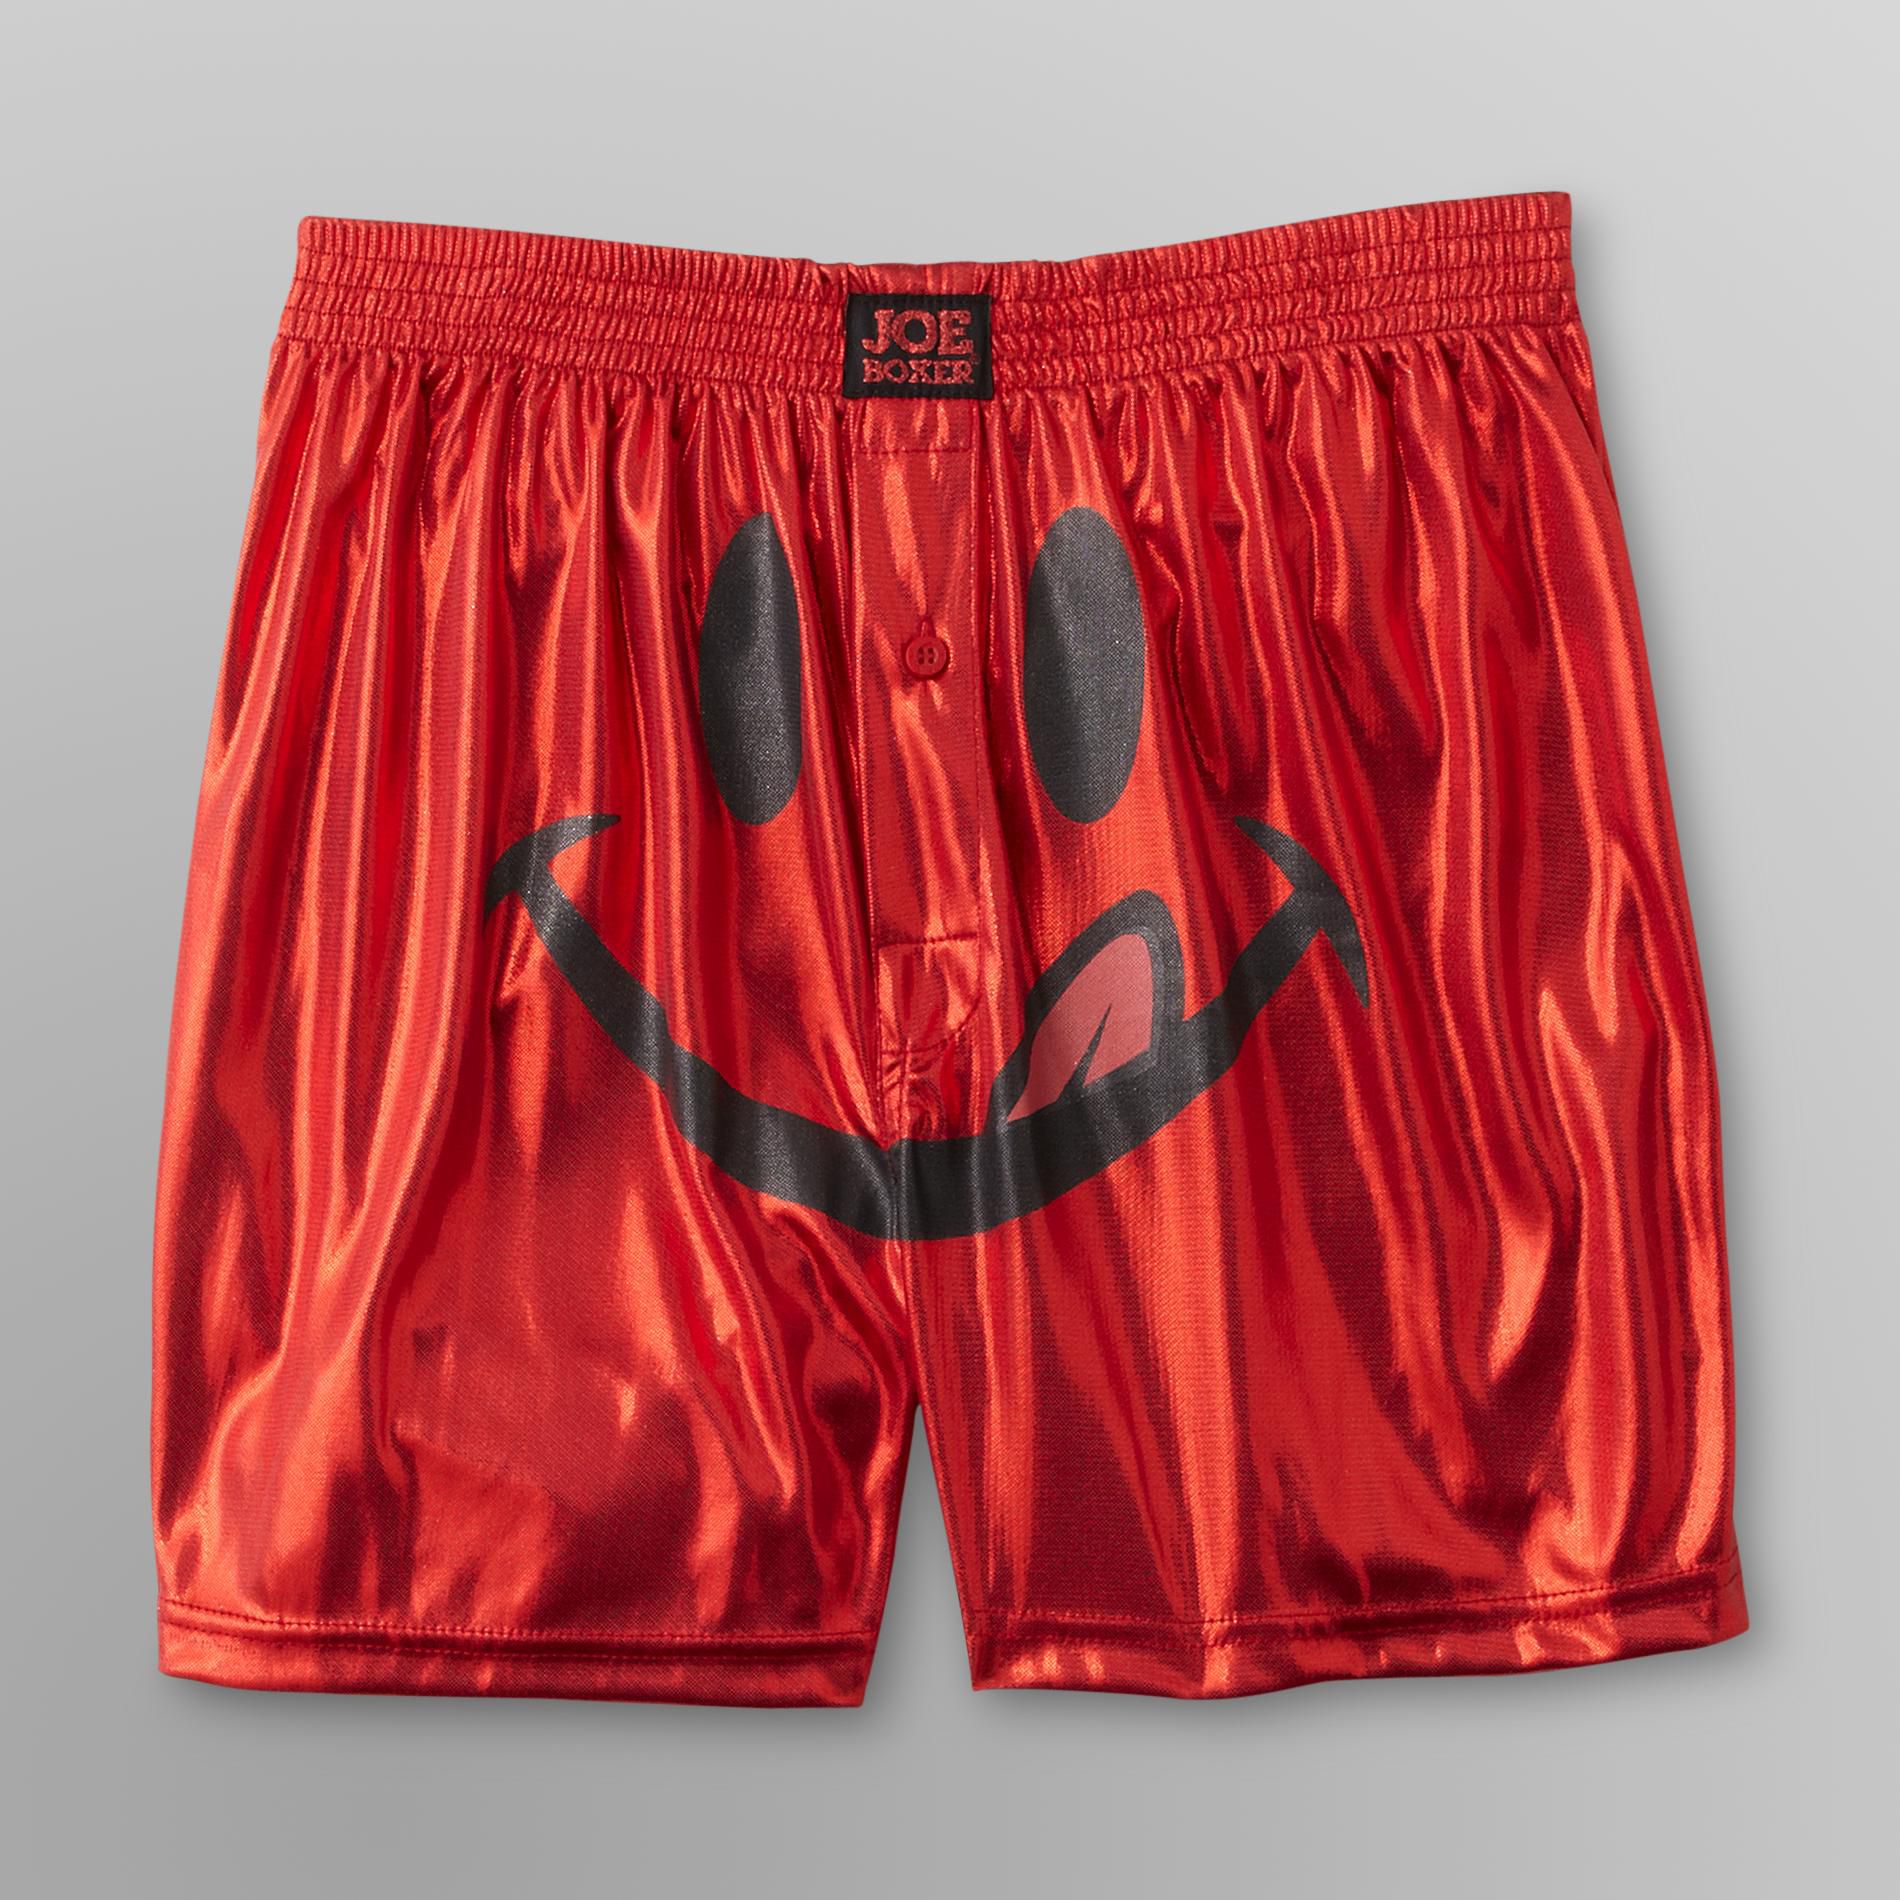 Joe Boxer Men's Boxer Shorts - Shiny Licky